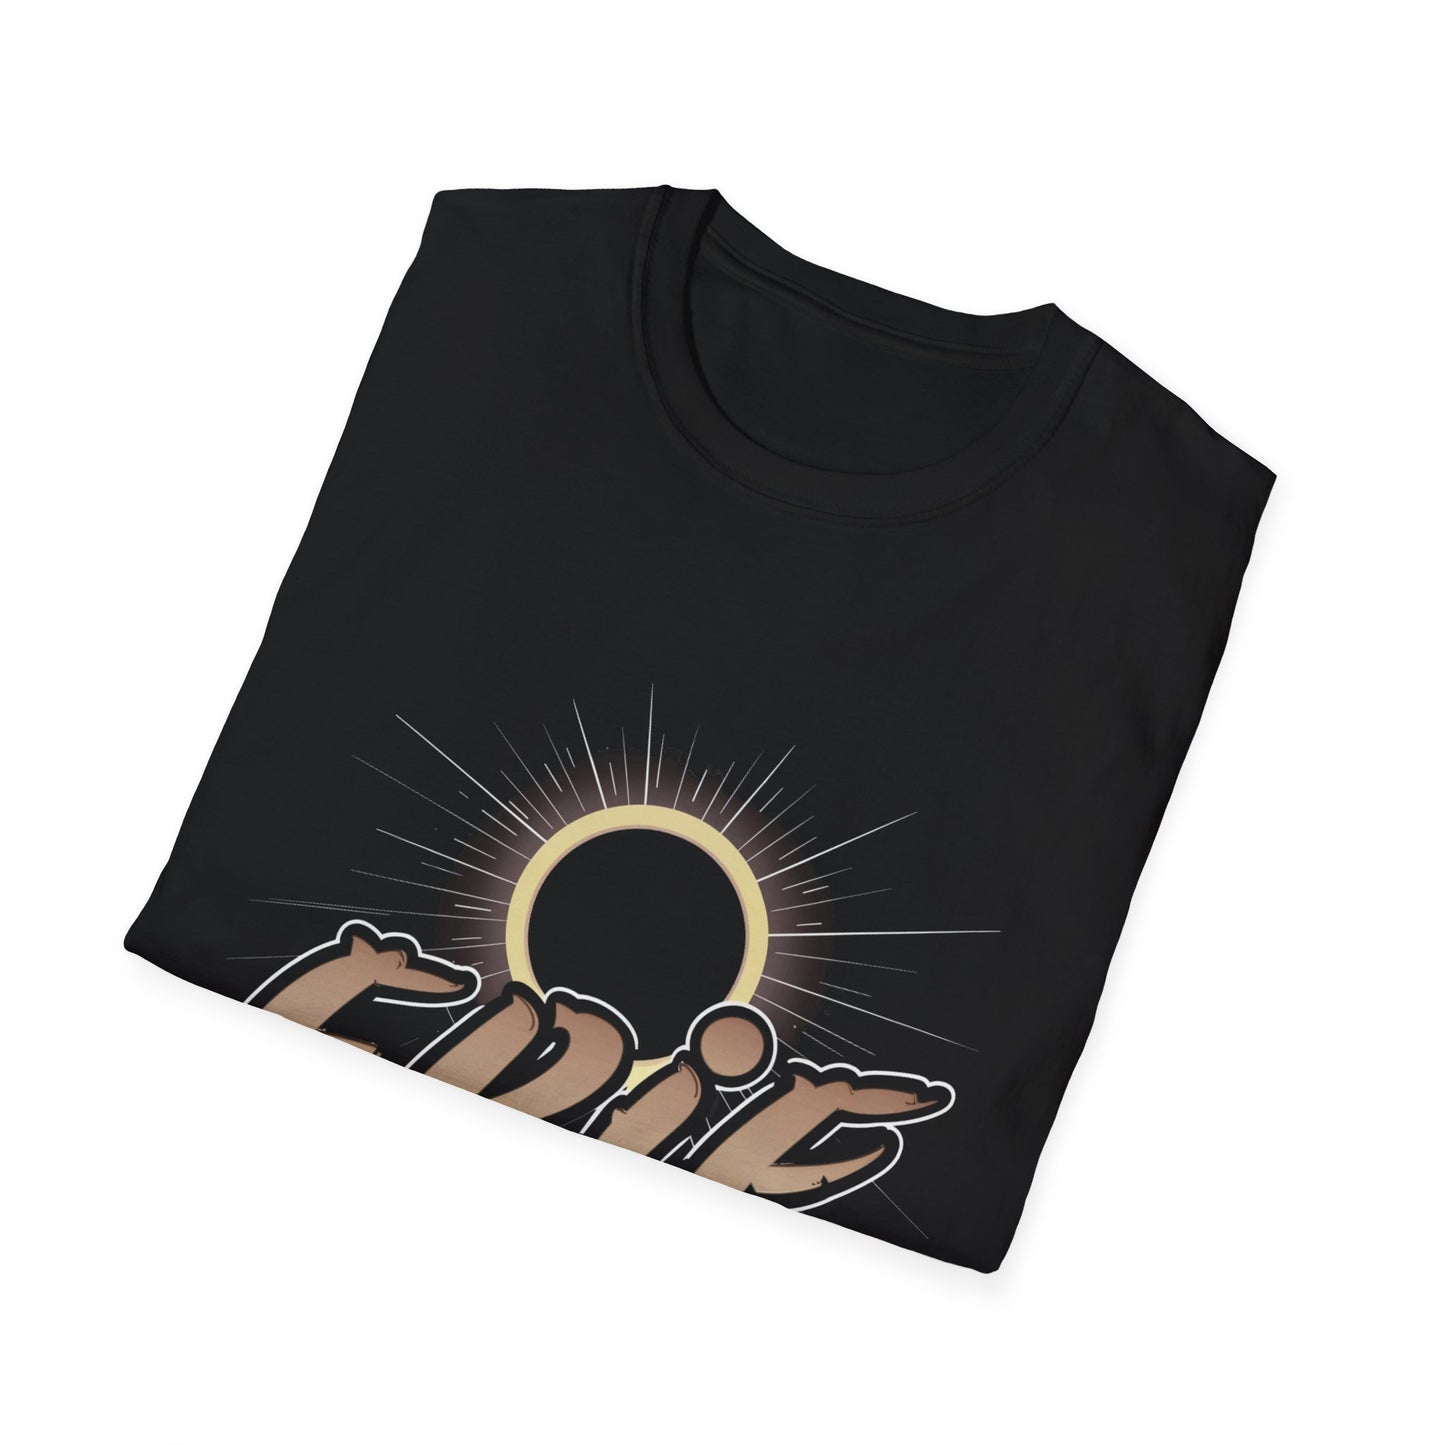 Erie Eclipse Radiant Horizon 2024, Unisex Softstyle Tee, Celestial Event Shirt